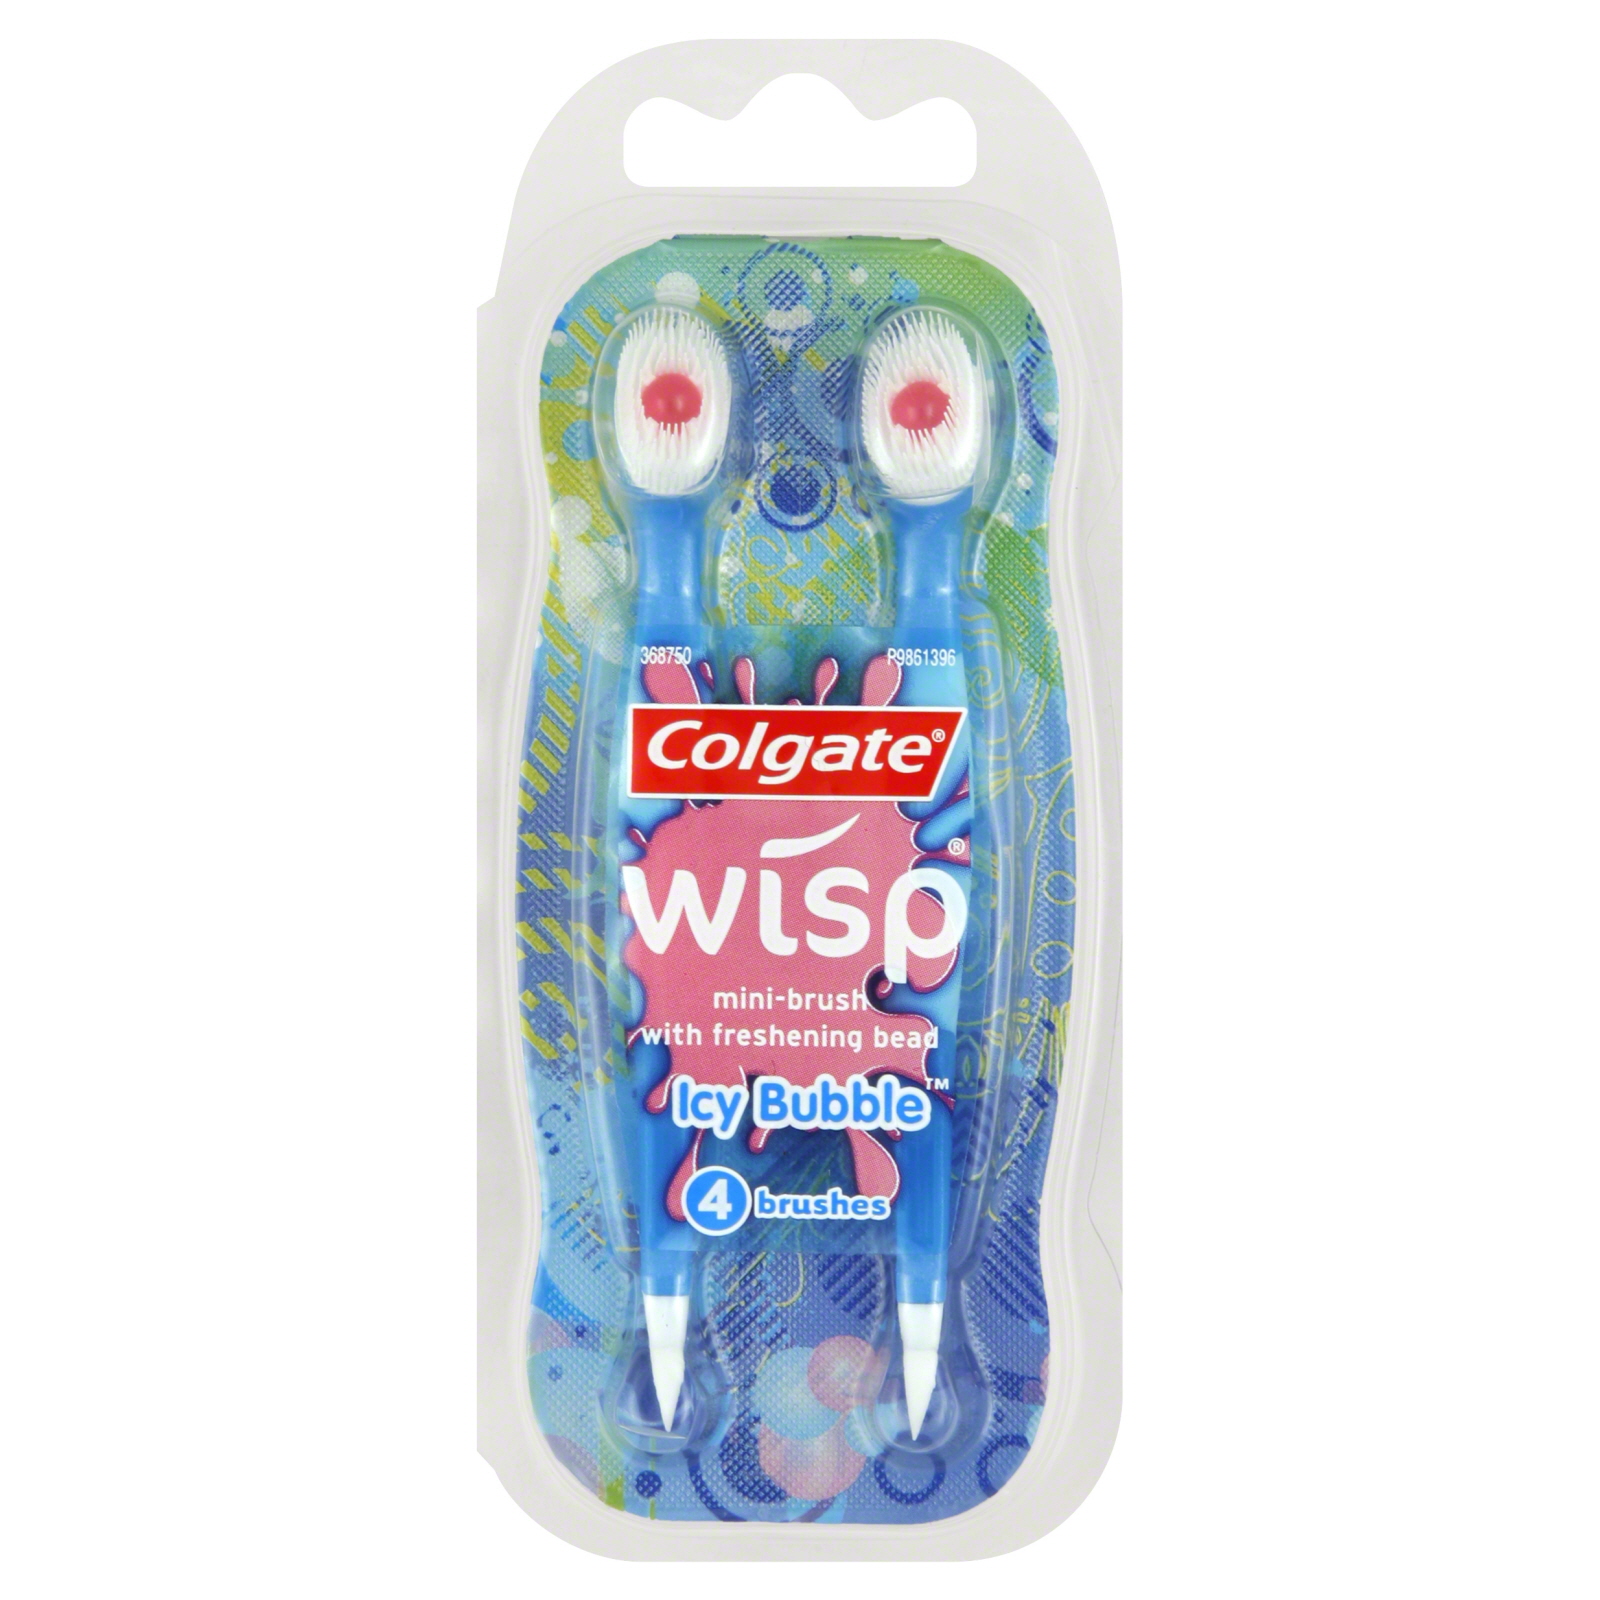 Colgate-Palmolive Wisp Toothbrushes, Mini, with Freshening Bead, Bubble Mint 4 brushes